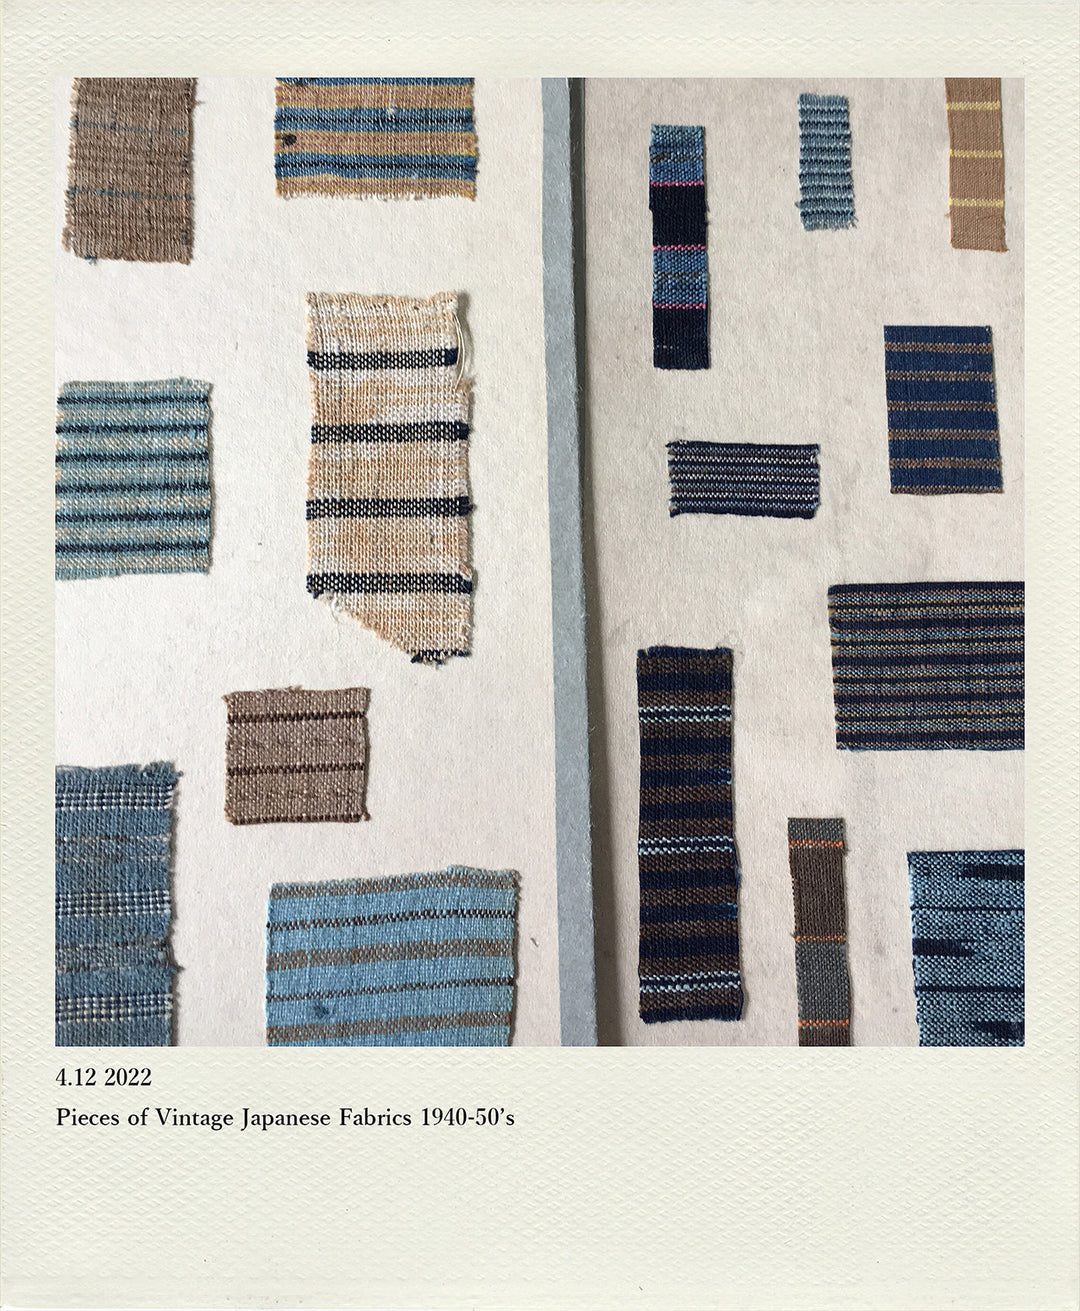 Pieces of Vintage Japanese Fabrics 1940-50’s